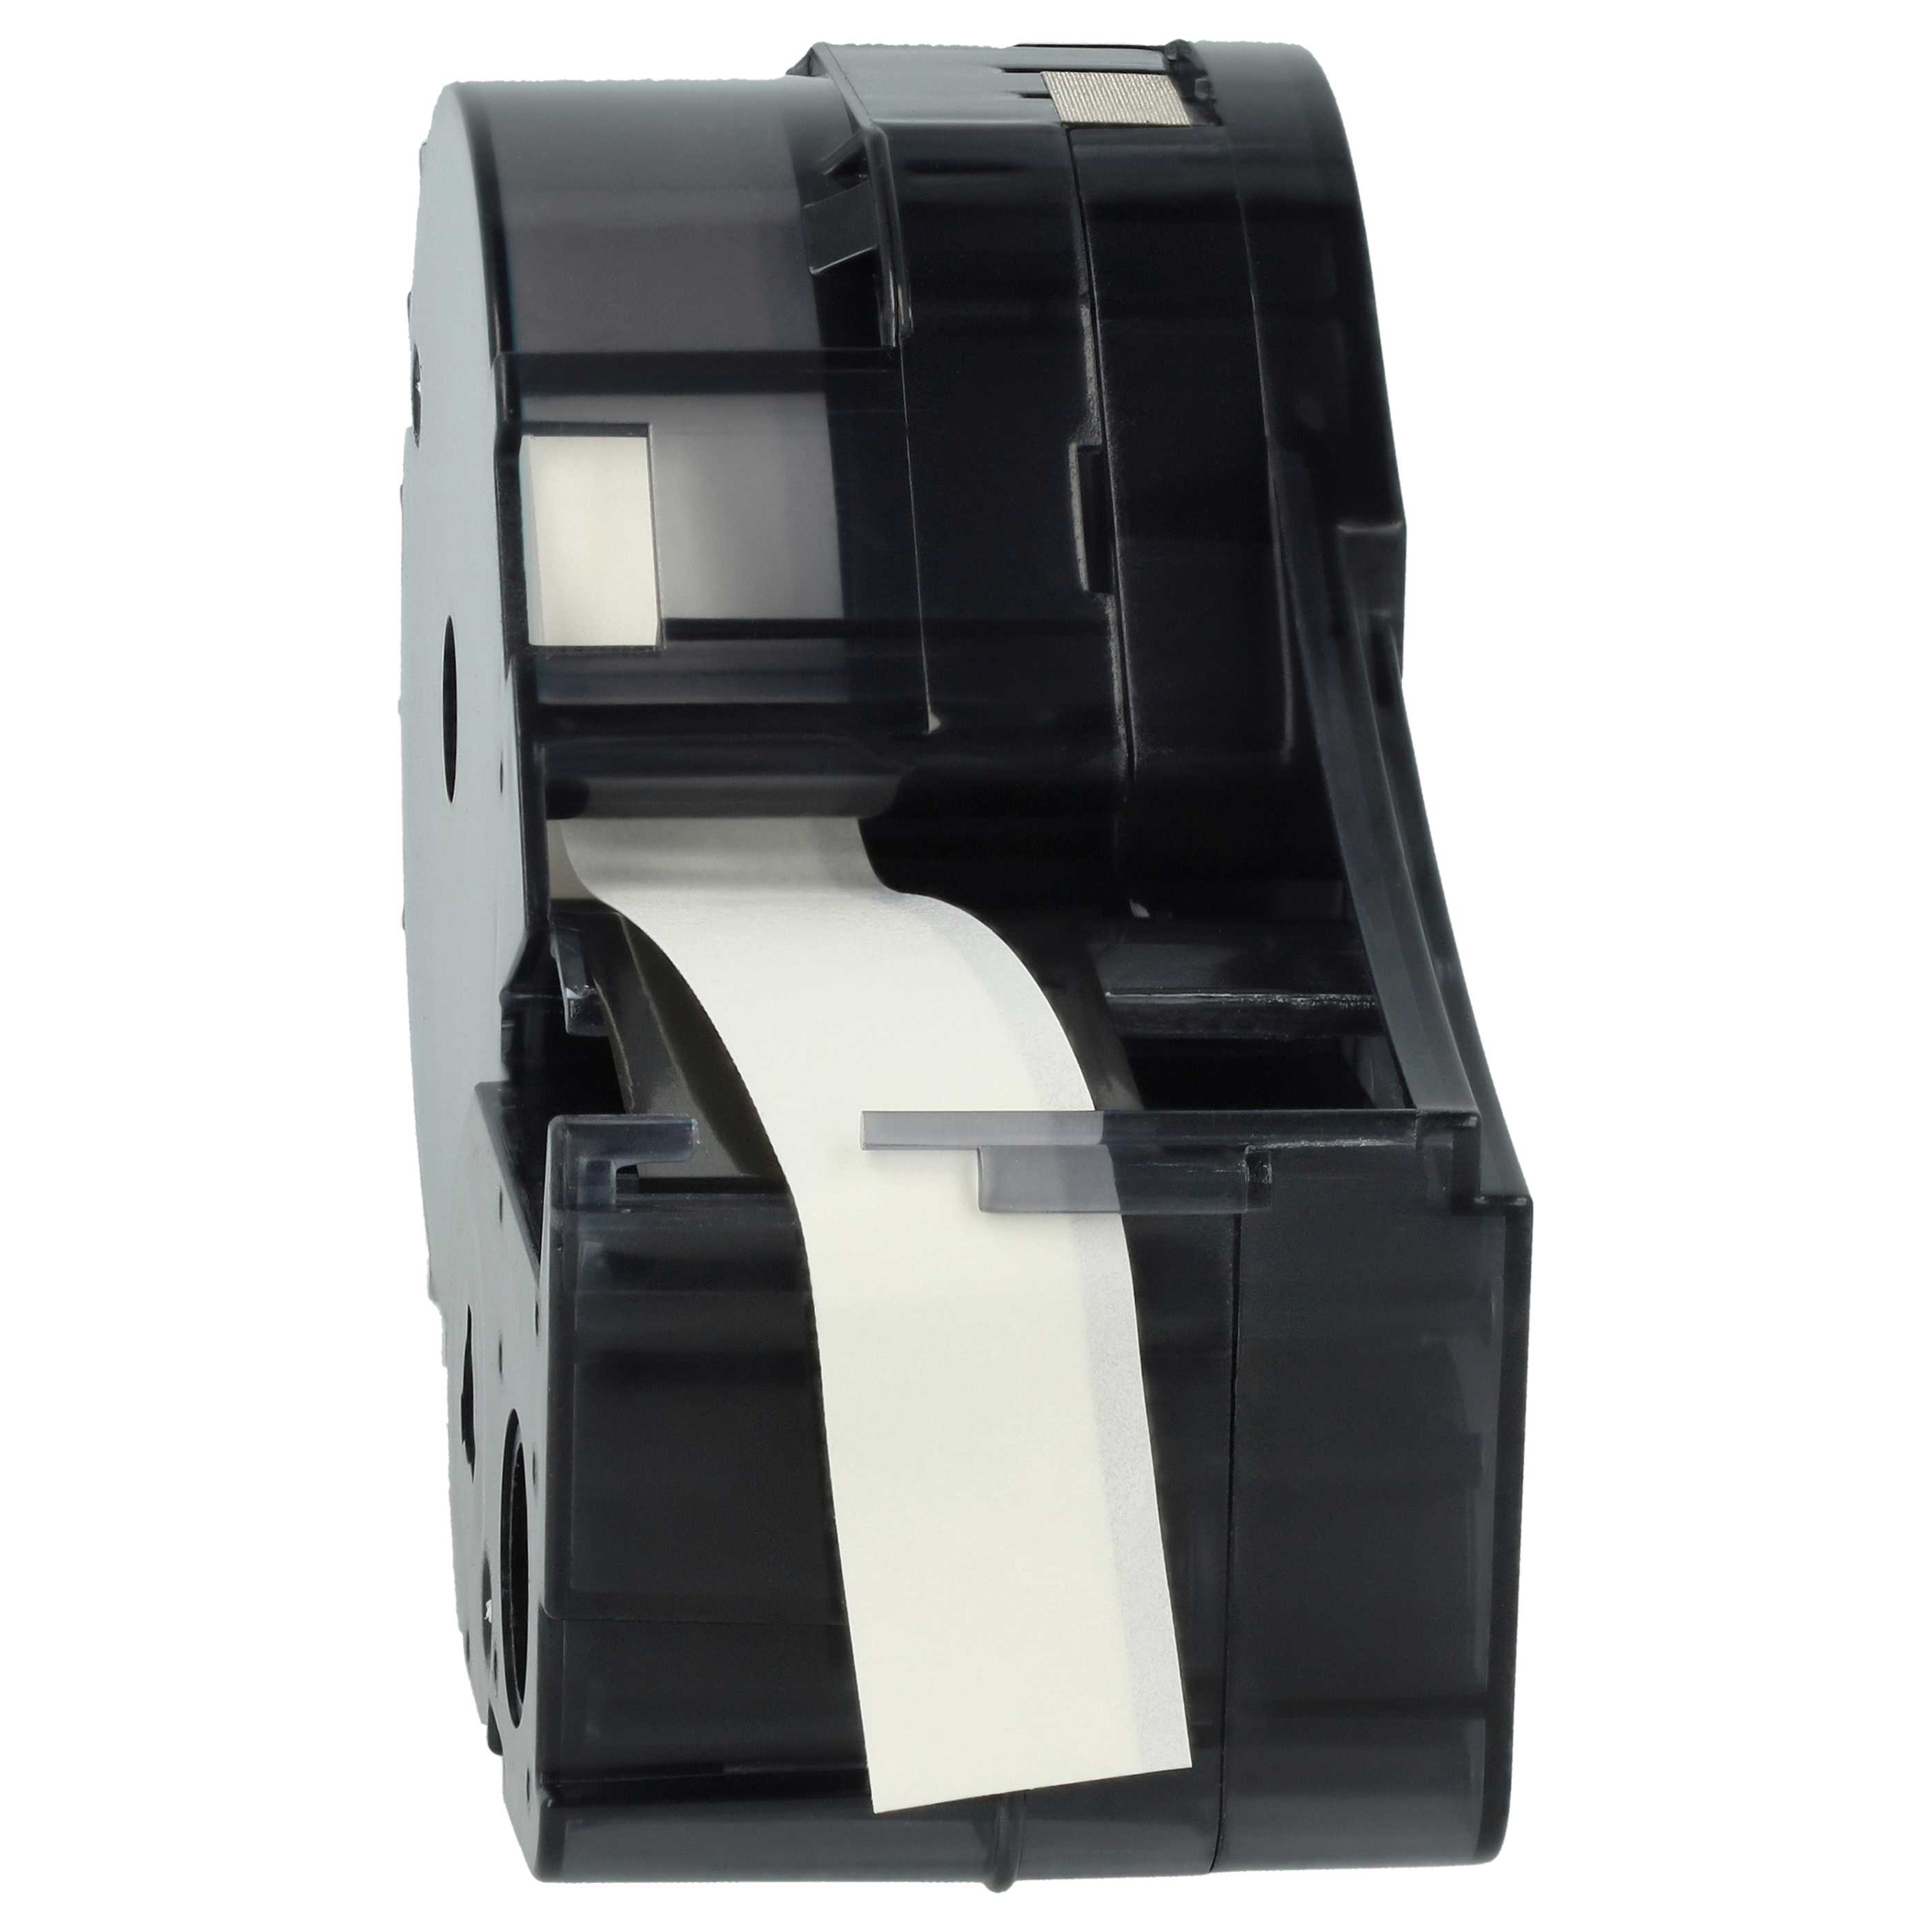 Cassetta nastro sostituisce Brady M21-375-499 - 9,53mm nero su bianco, Nylon Cloth Polyamid